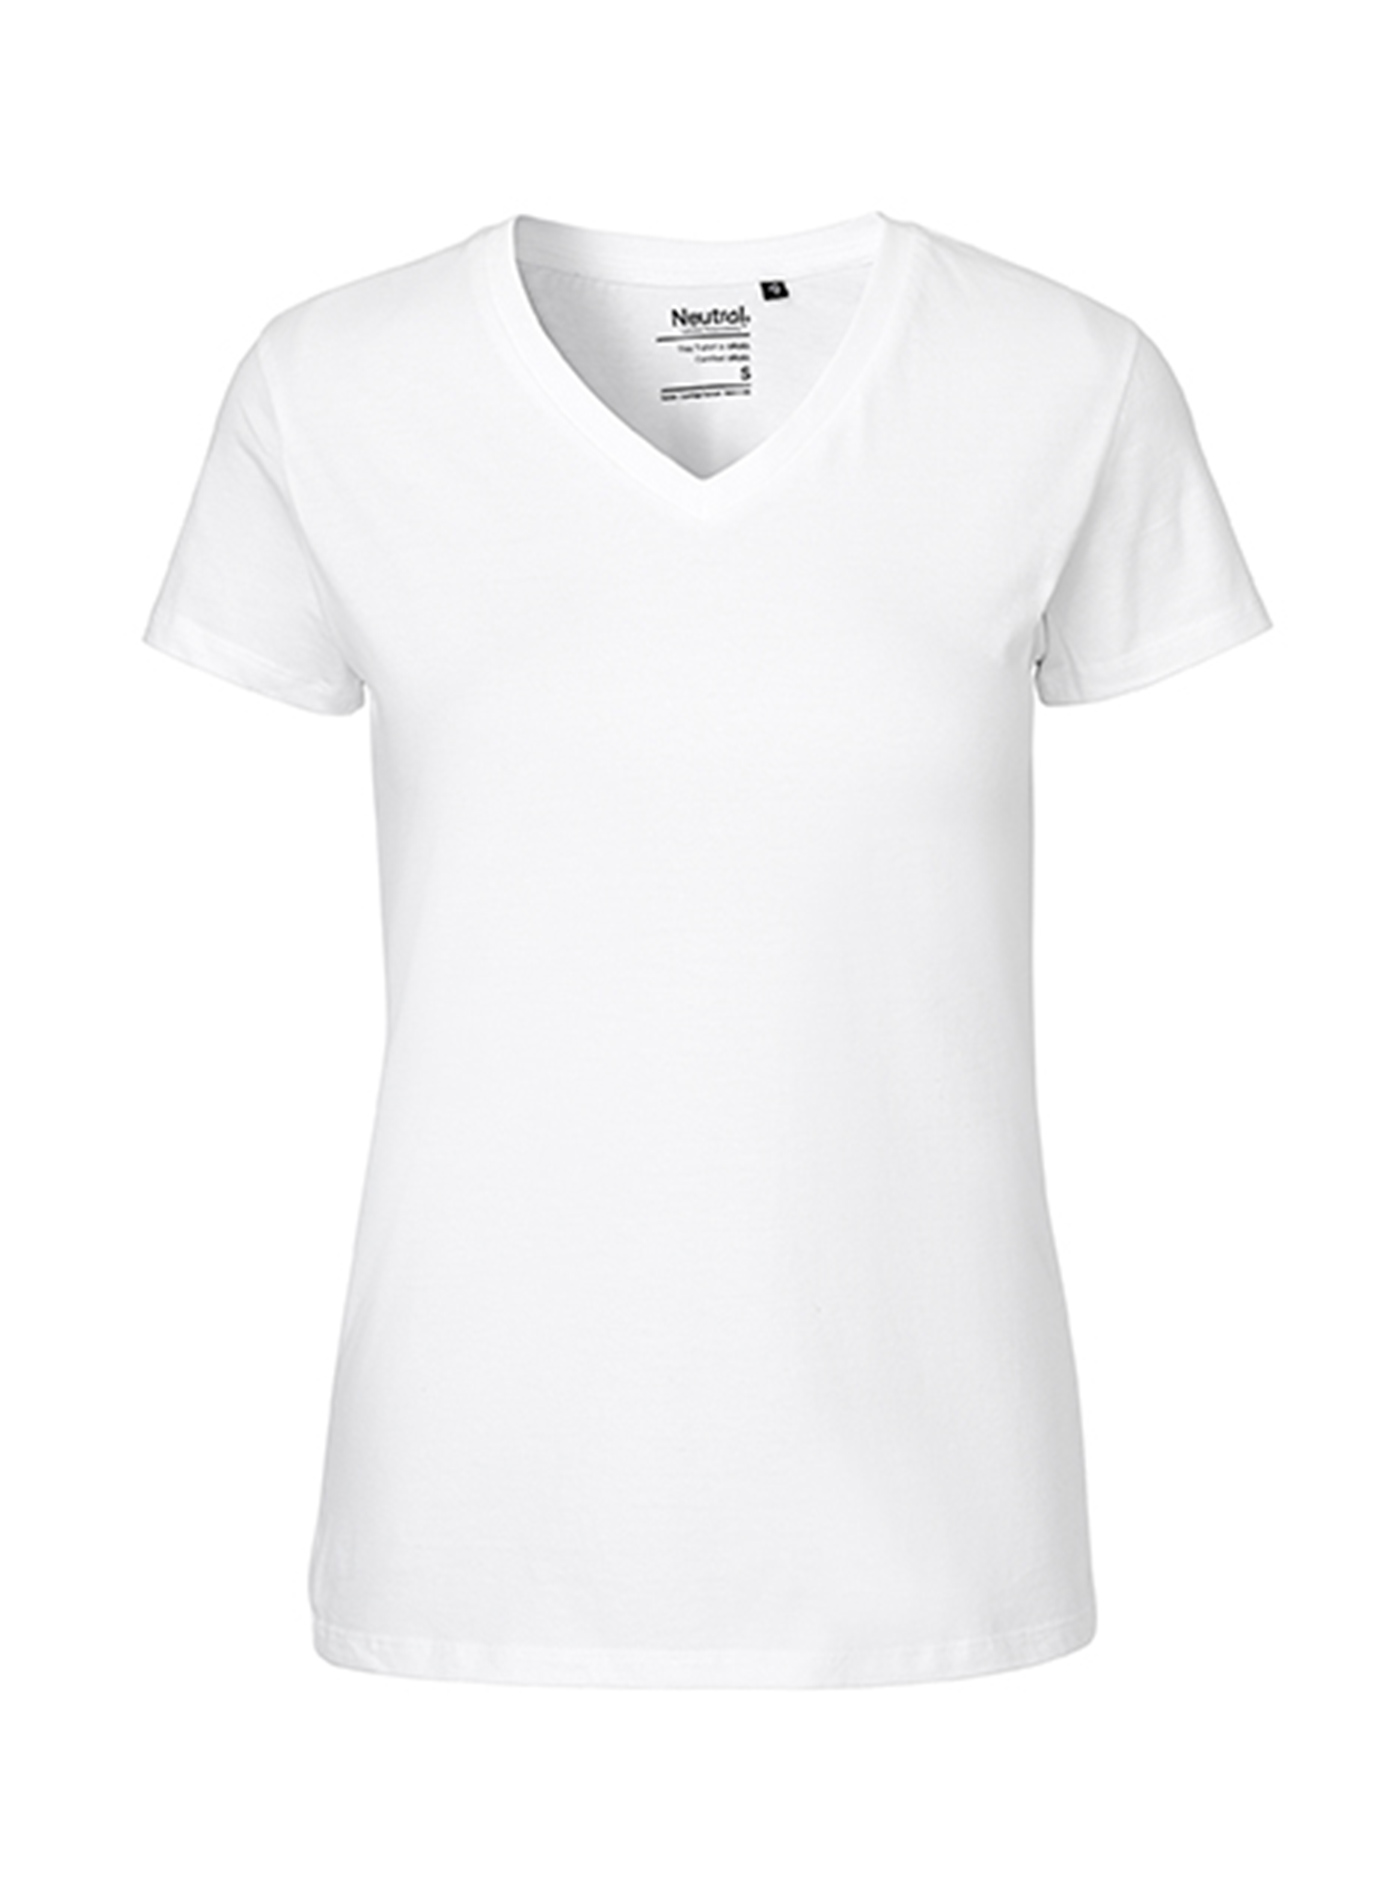 Dámské tričko V-Neck Neutral - Bílá L